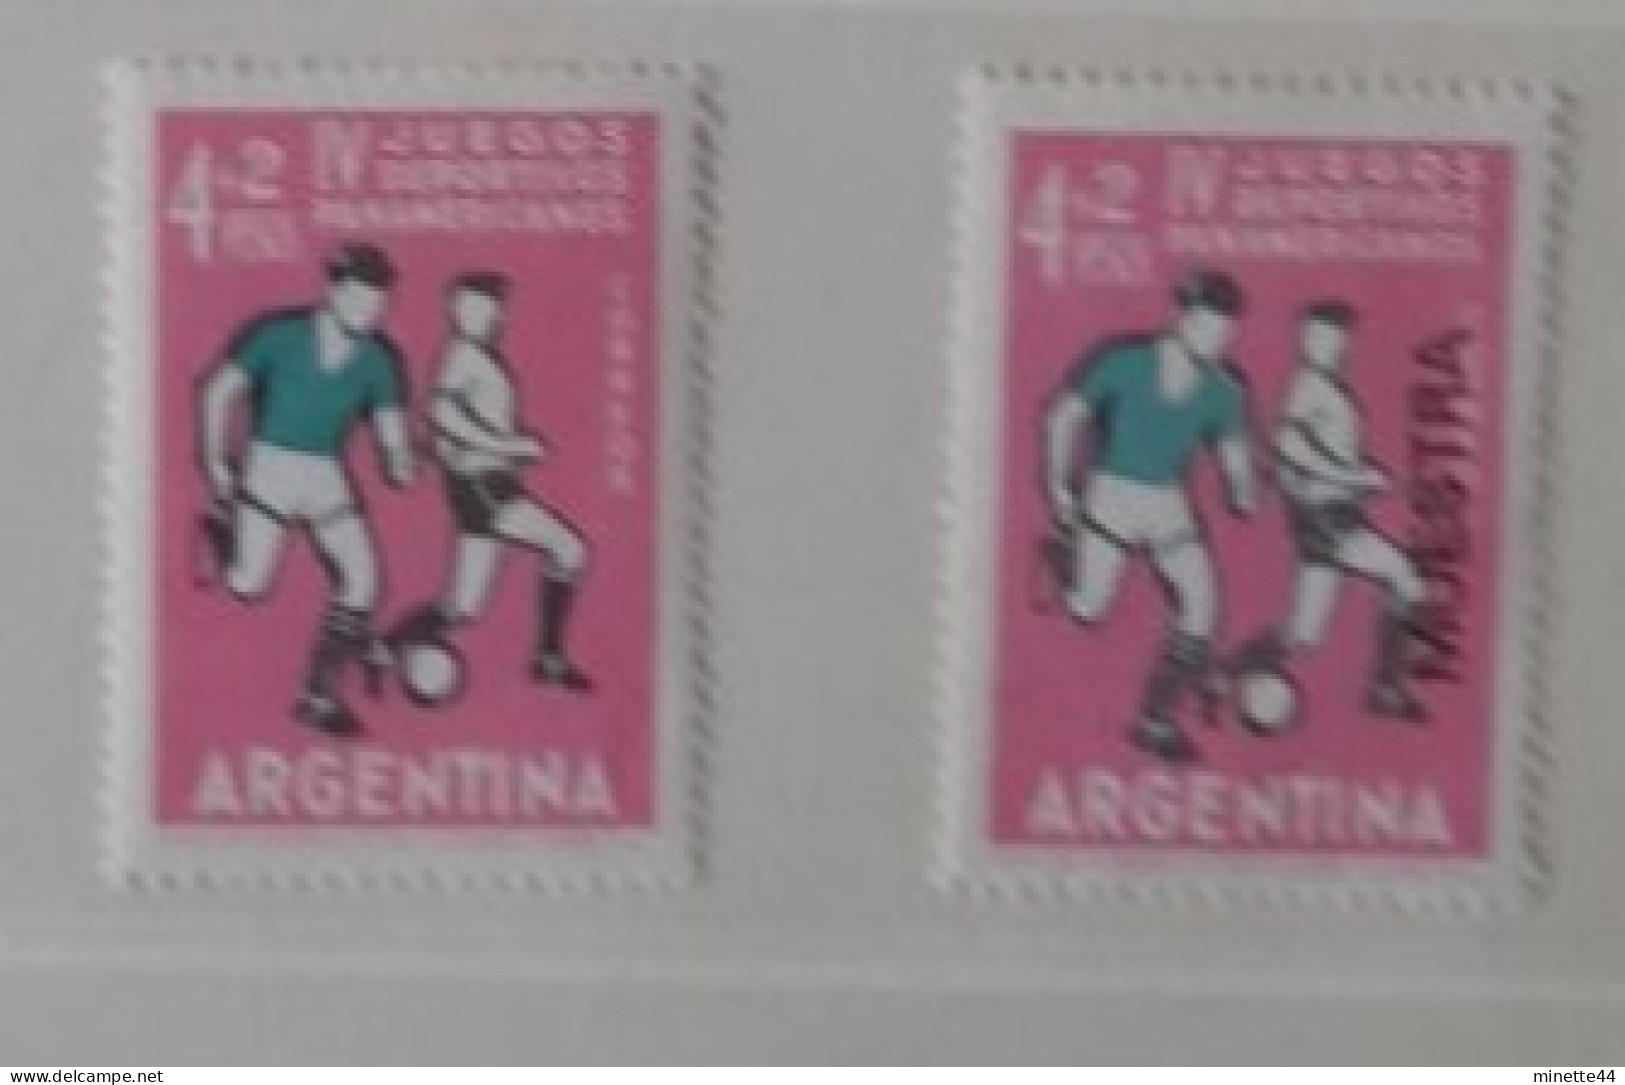 ARGENTINE ARGENTINA MNH** 1963 + MUESTRA FOOTBALL FUSSBALL SOCCER CALCIO VOETBAL FUTBOL FUTEBOL FOOT FOTBAL - Nuovi